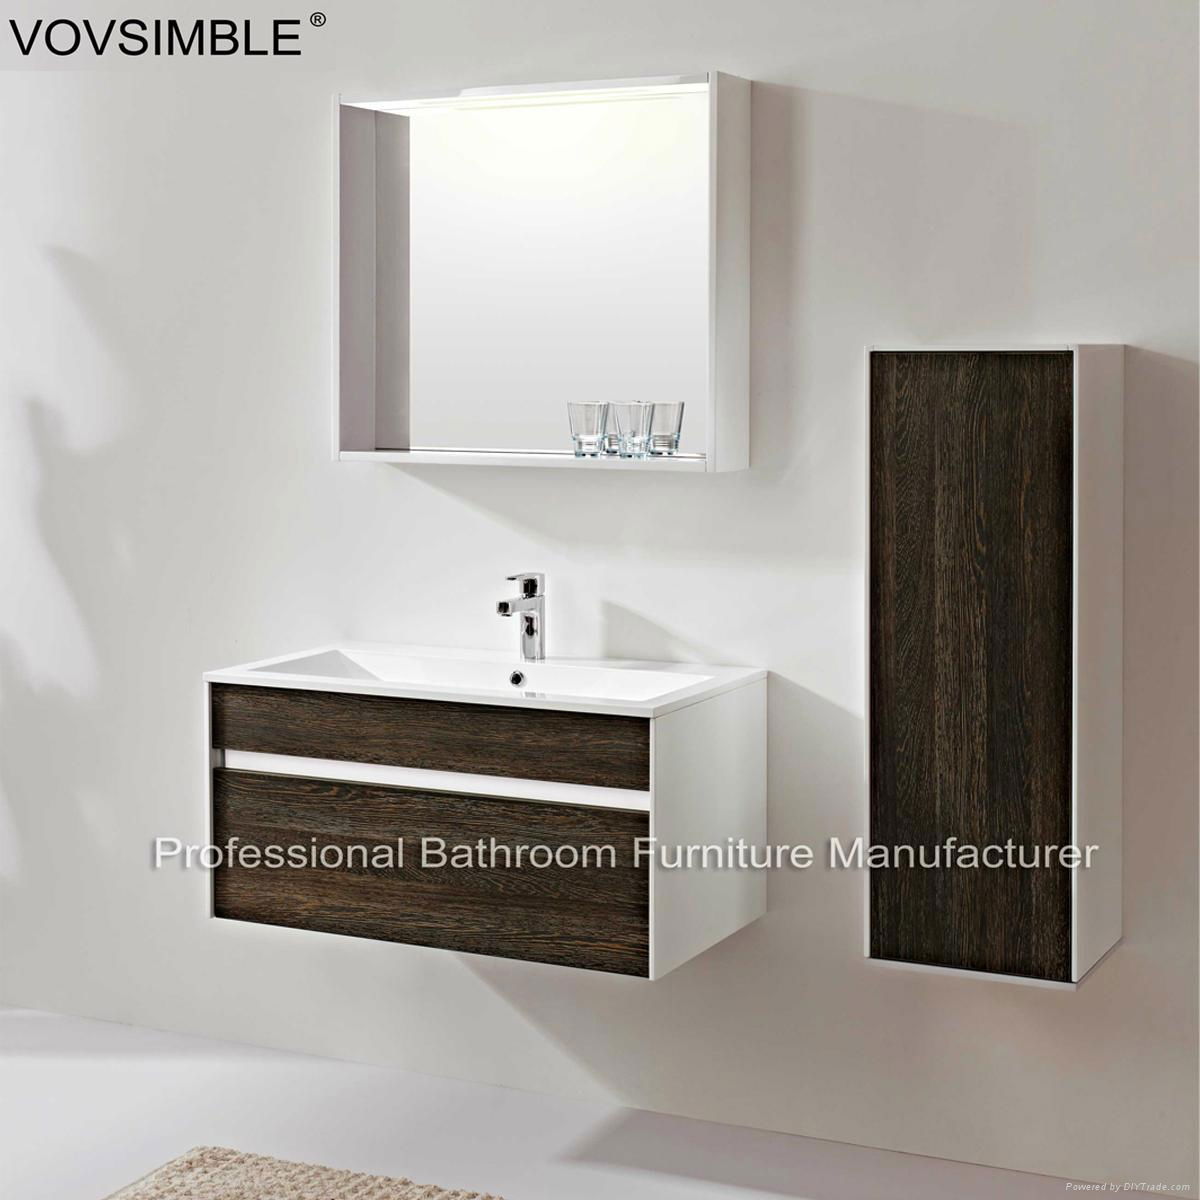 Vovsimble-Romoting Bathroom Vanity Cabinet-Sj090 Factory Direct Price 2